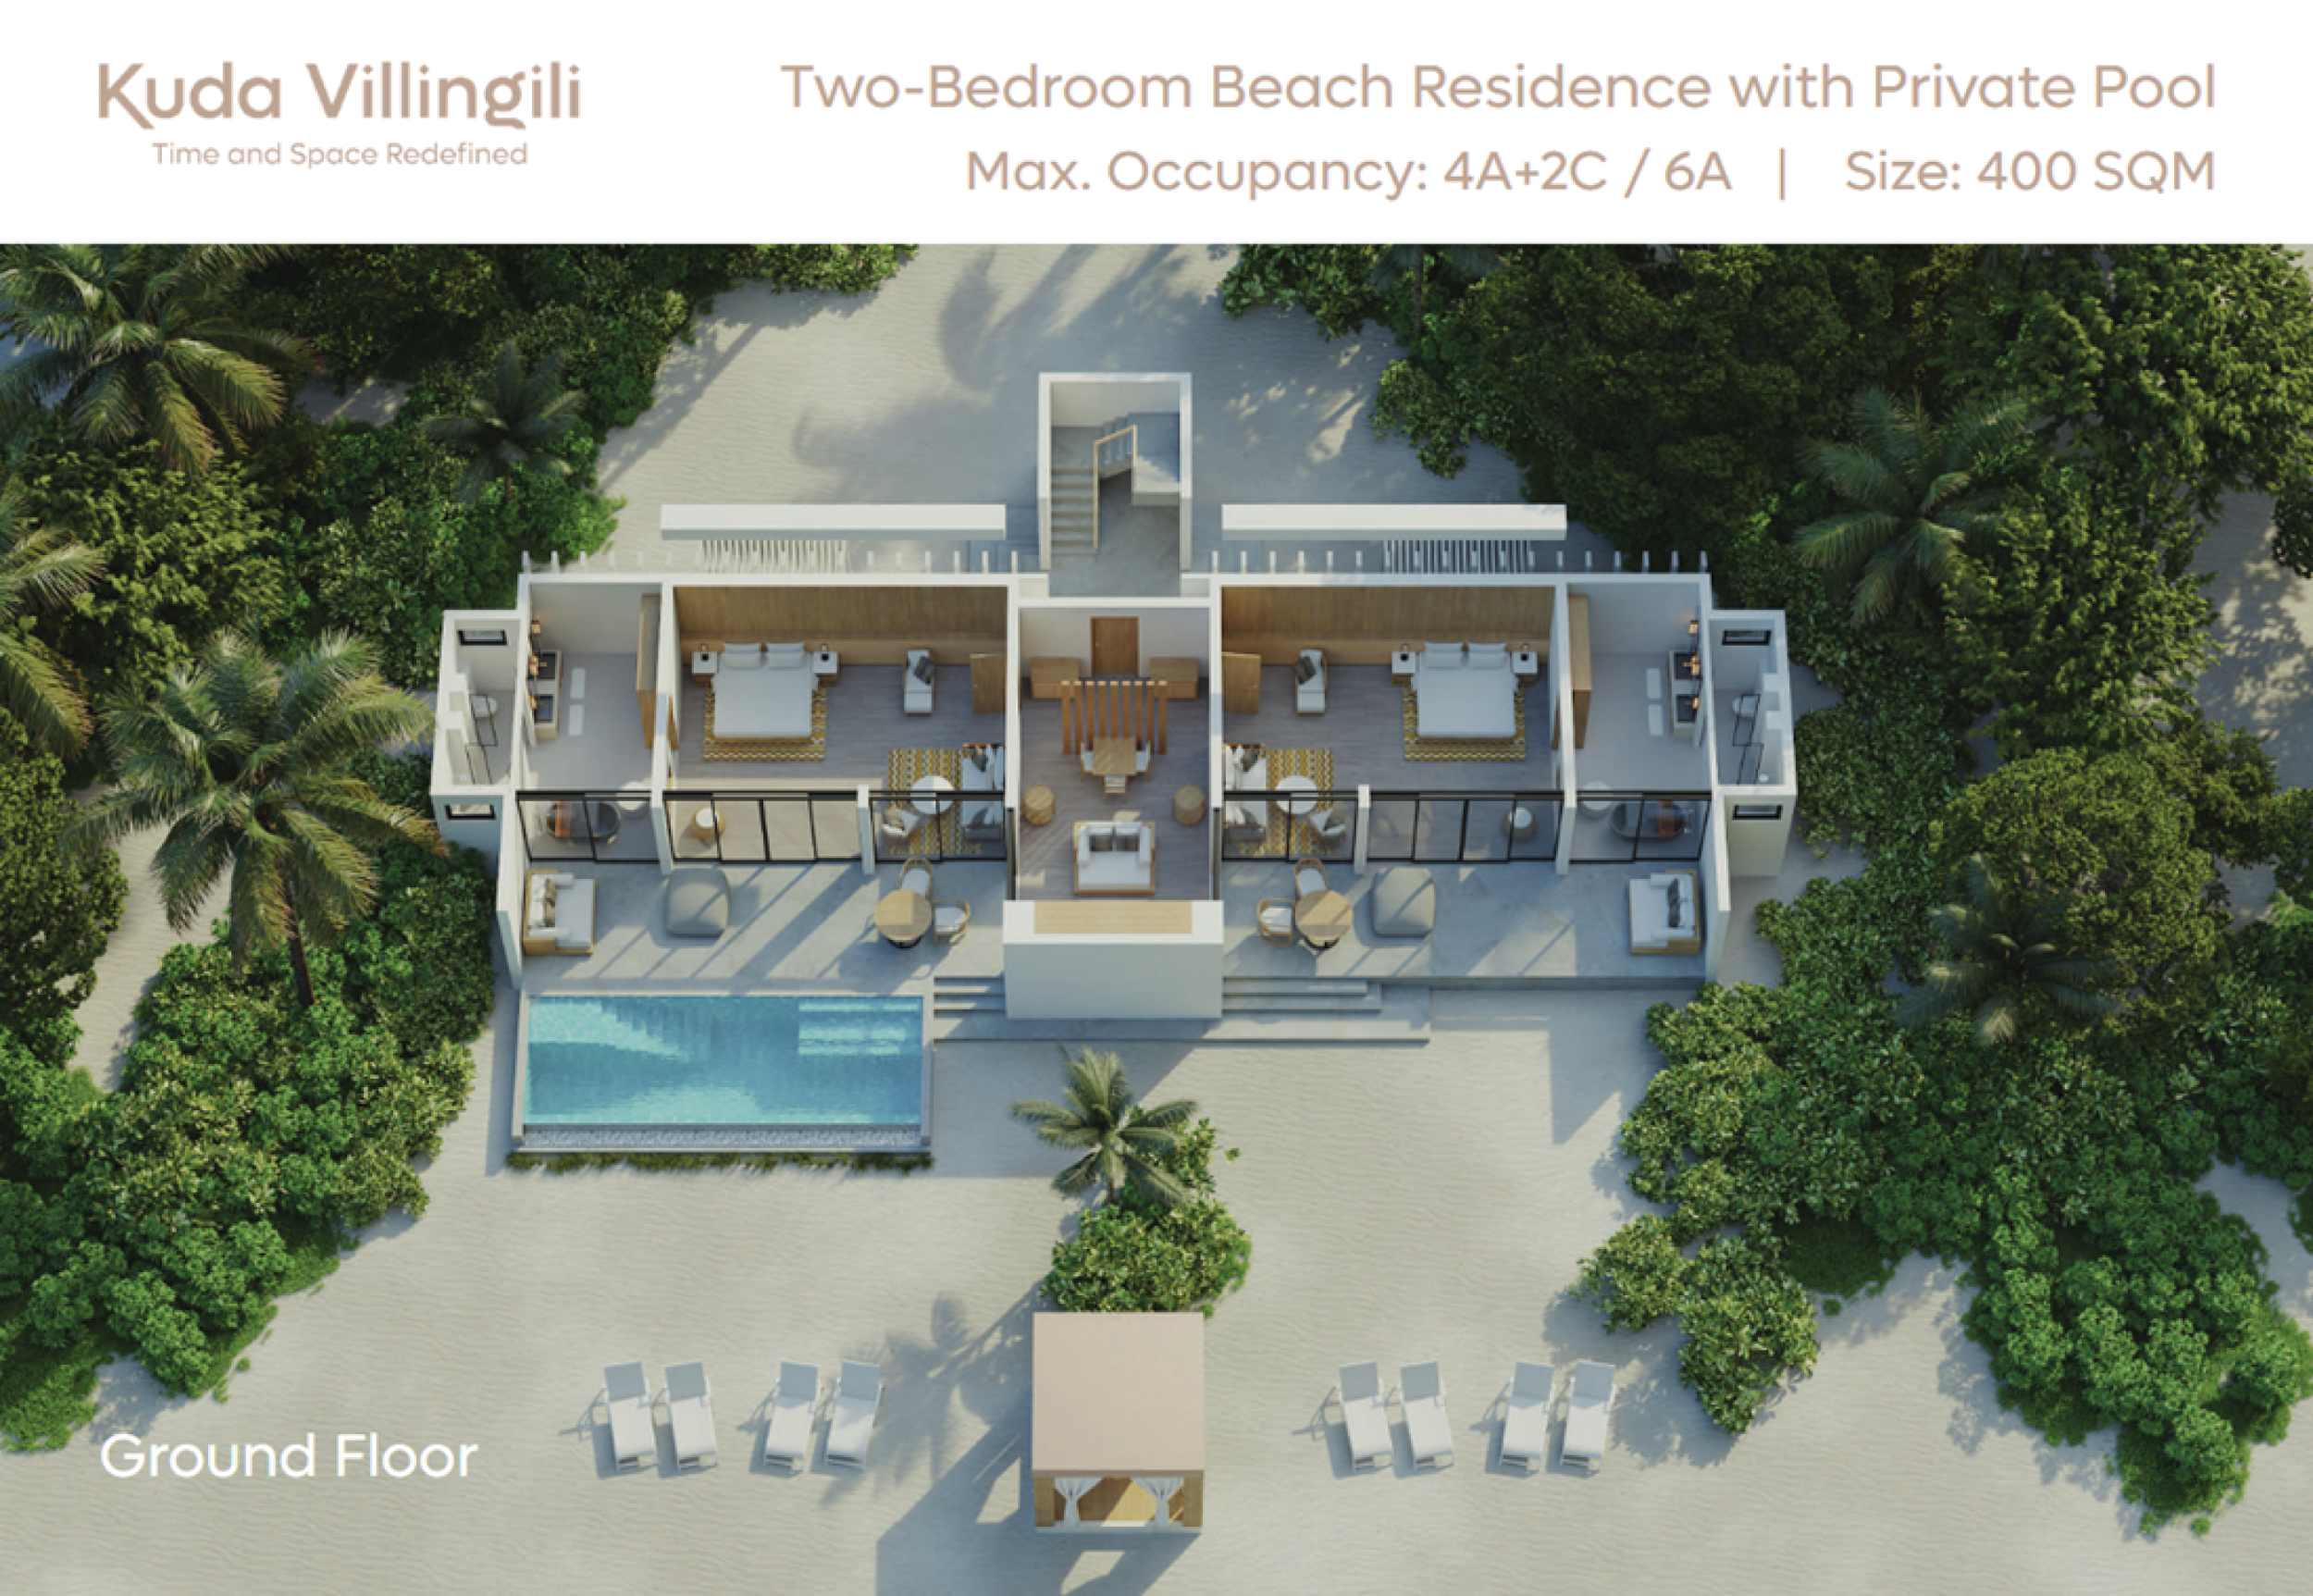 Two-bedroom Beach Residence with Private Pool - Kuda Villingili Resort Maldives